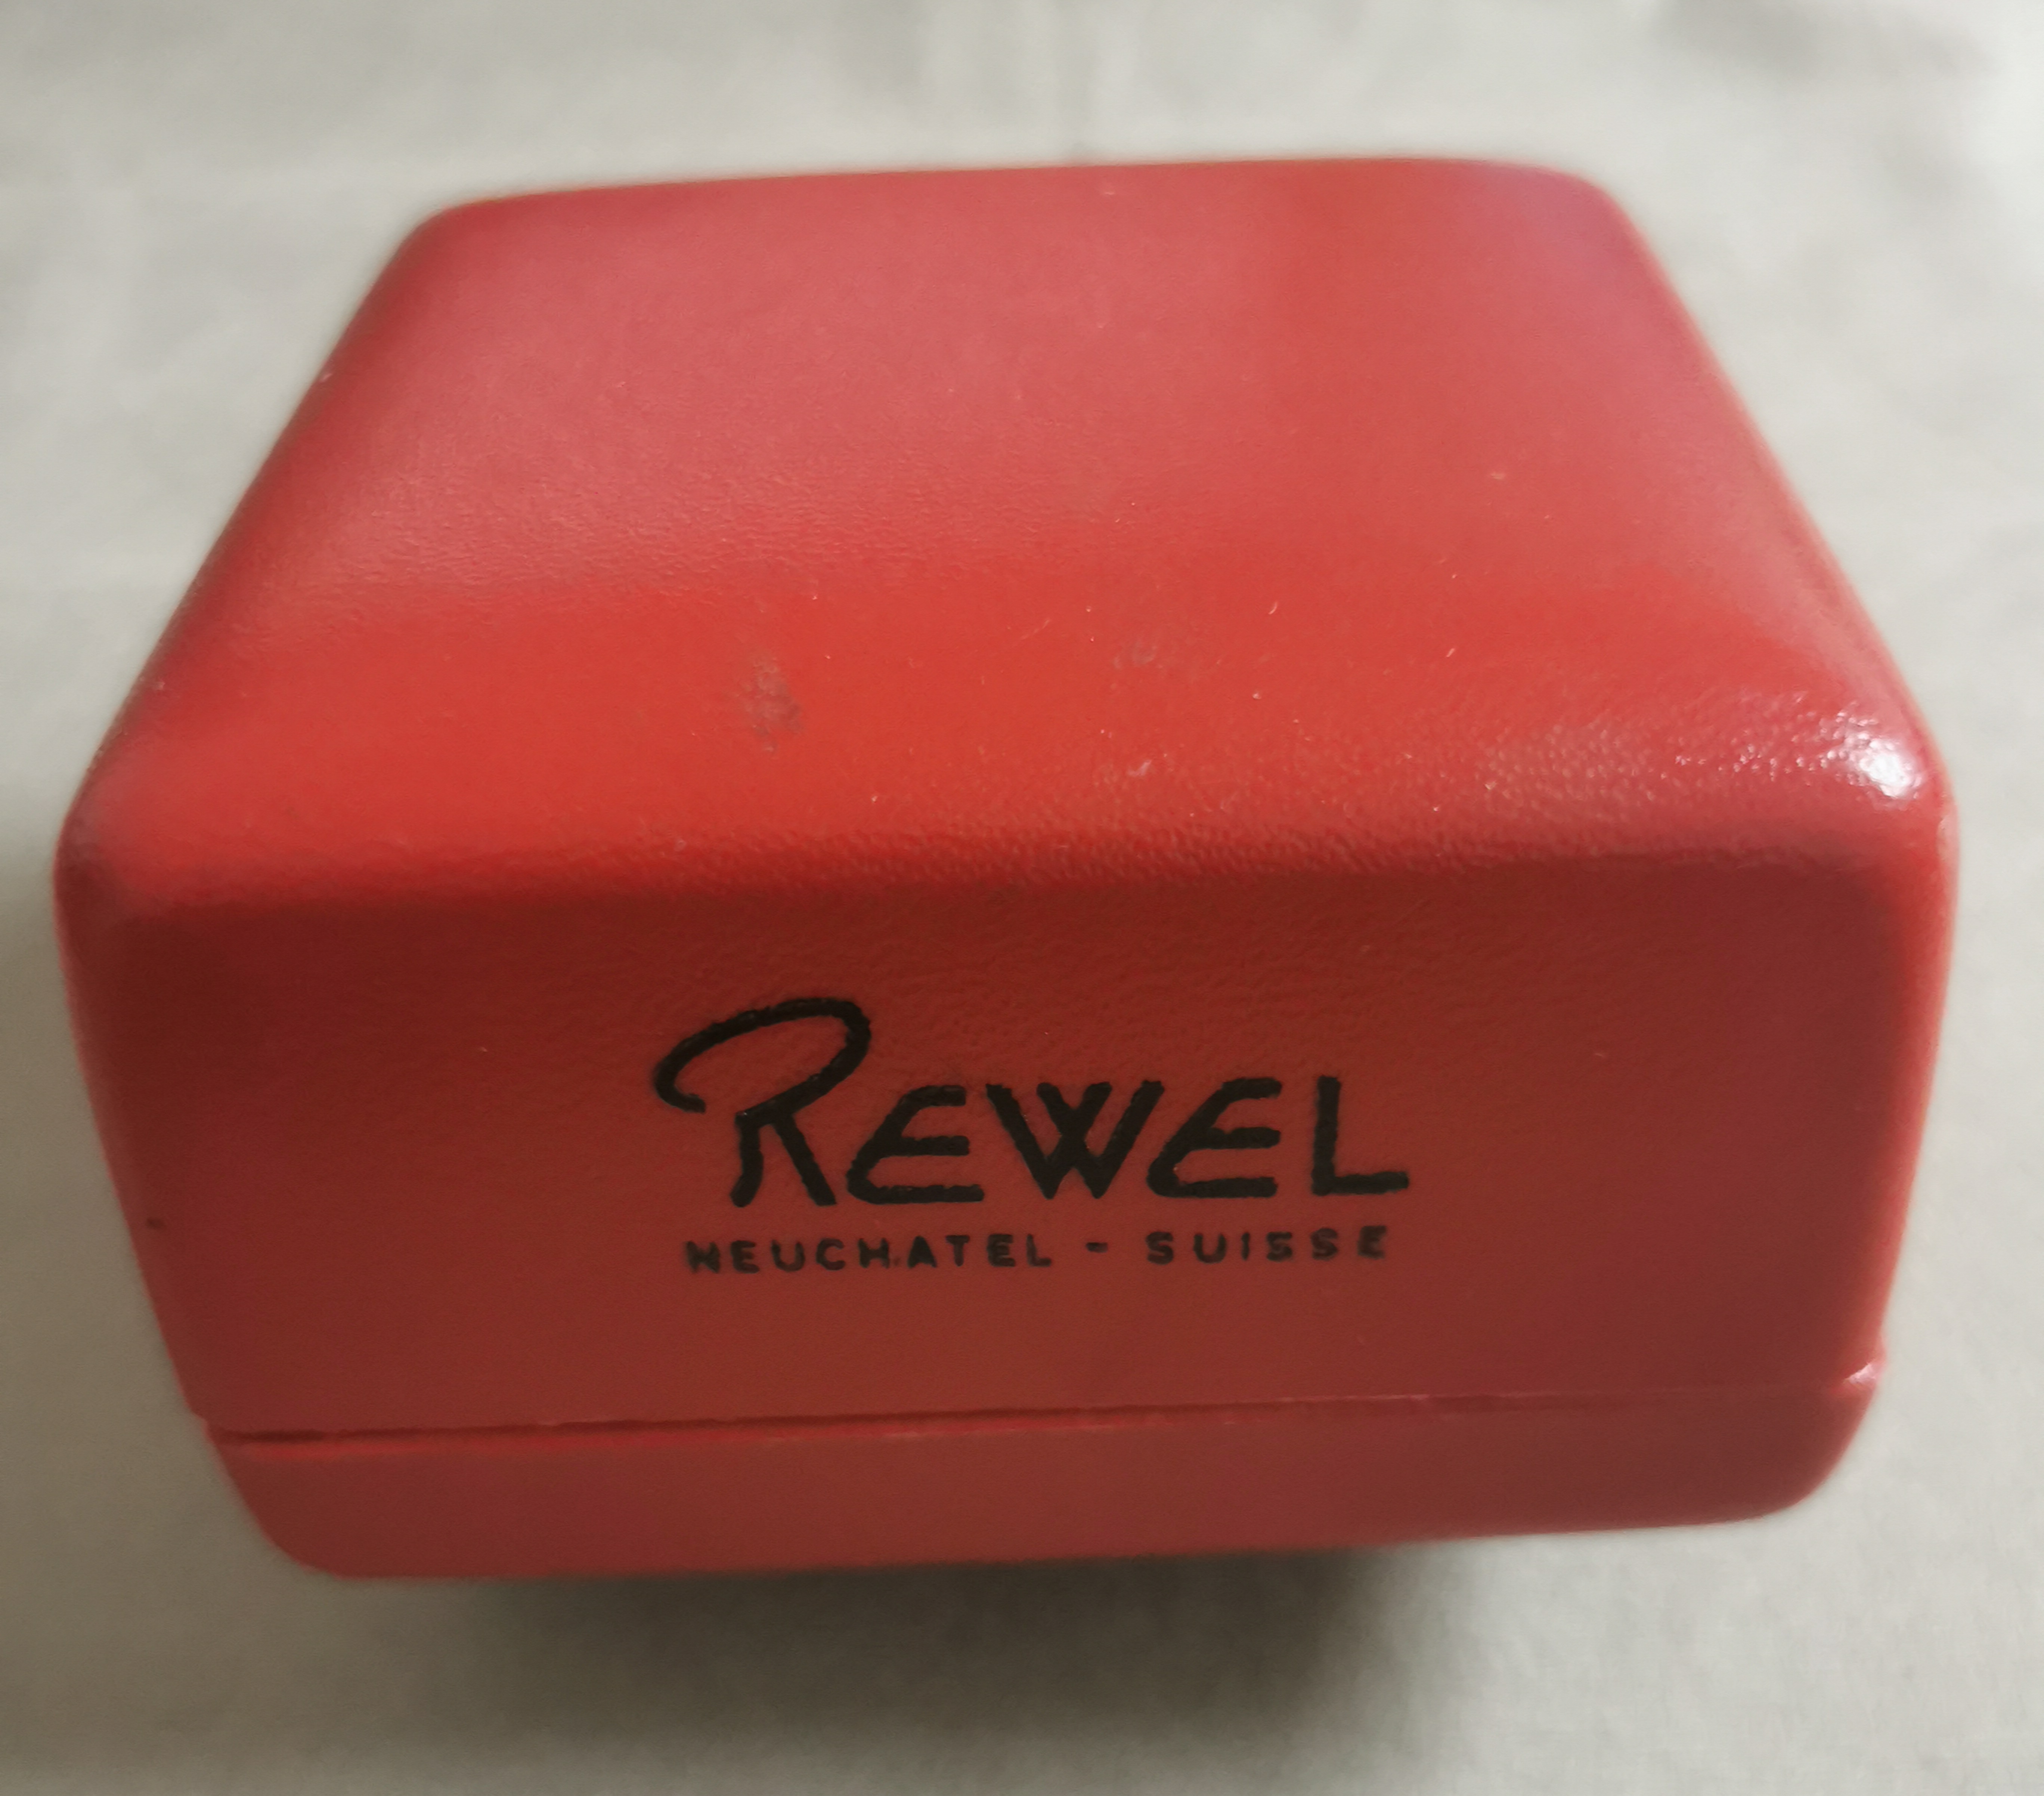 Anonimo Rewel rare vintage watch plastic box brick red color for any models good condition | San Giorgio a Cremano